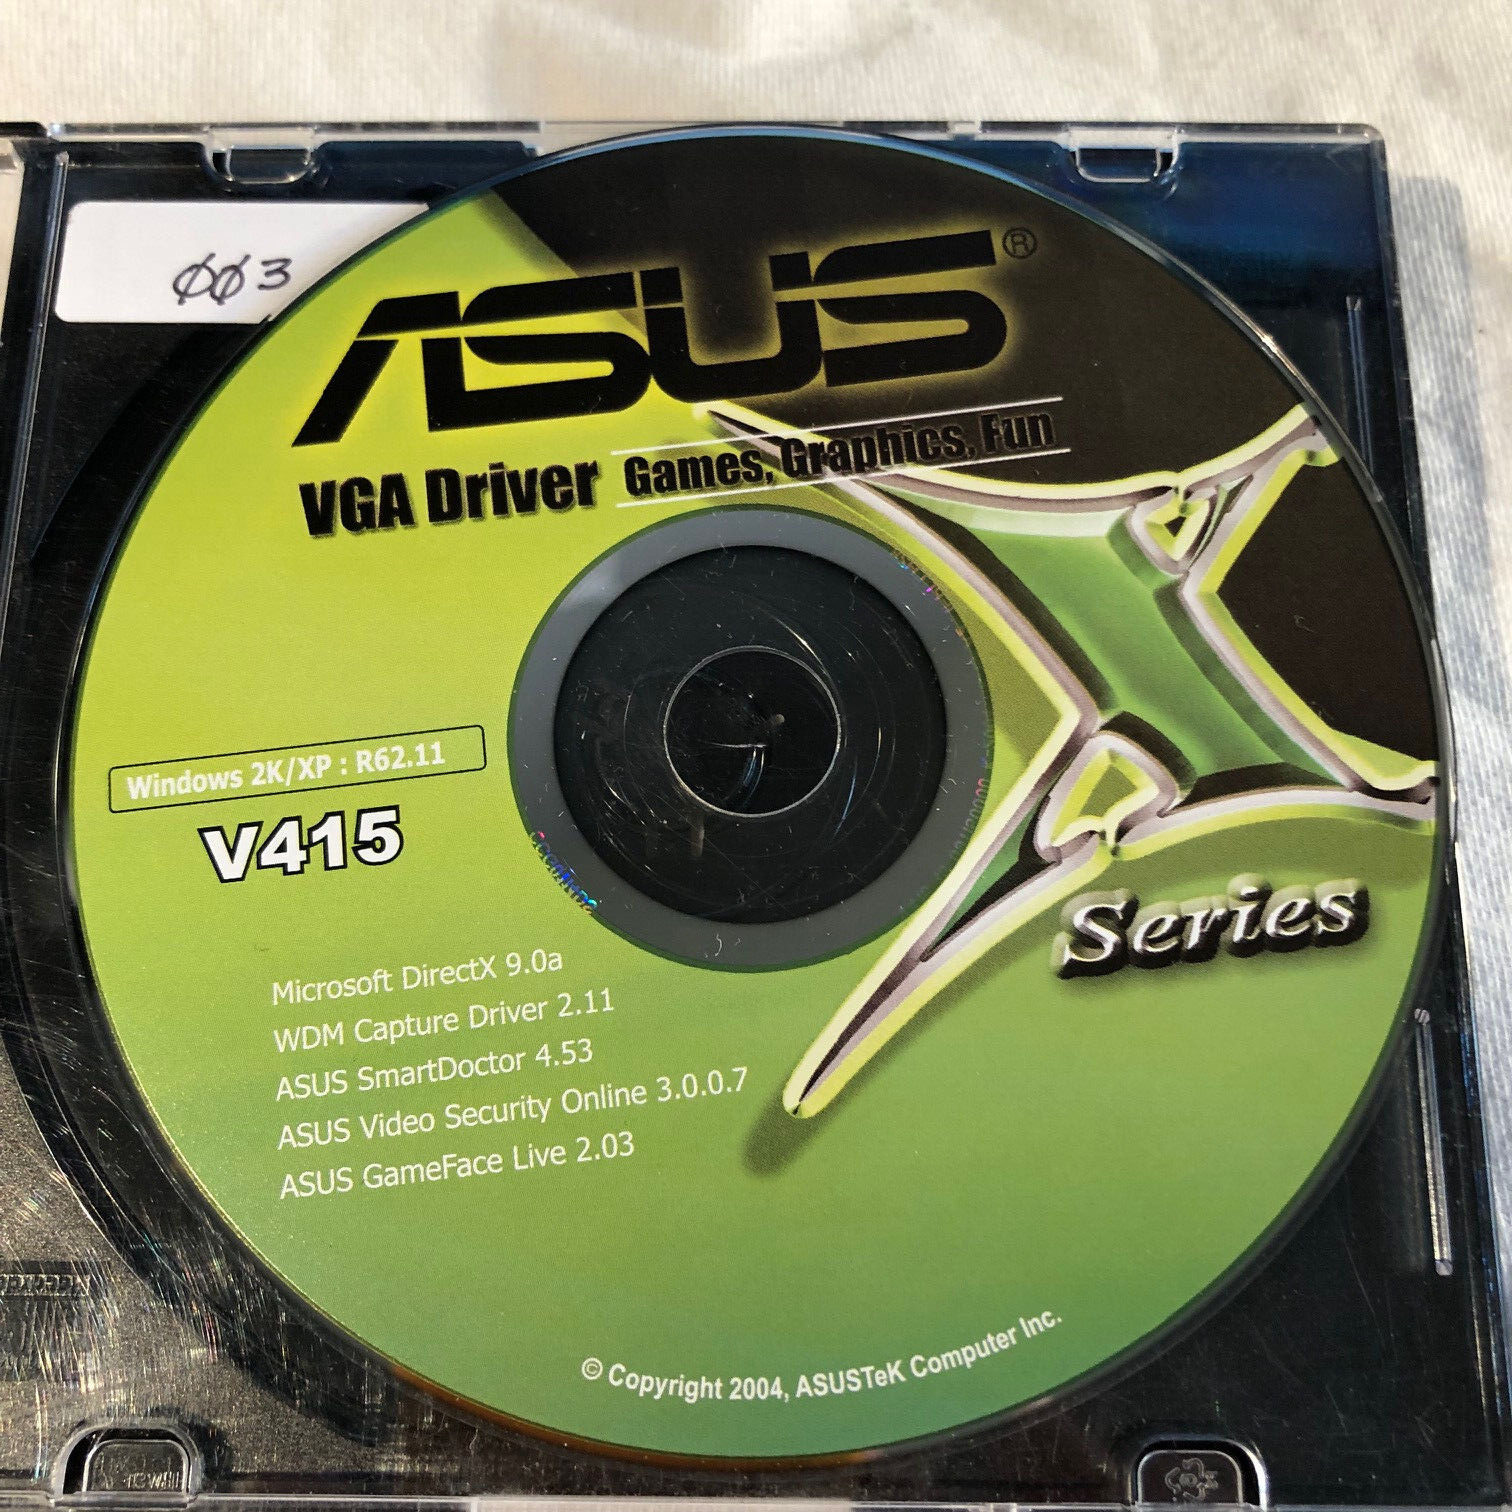 ASUS VGA Driver CD - DX 9.0, WDV Capture, Asus Smart Doctor, Asus Vidoe Sec